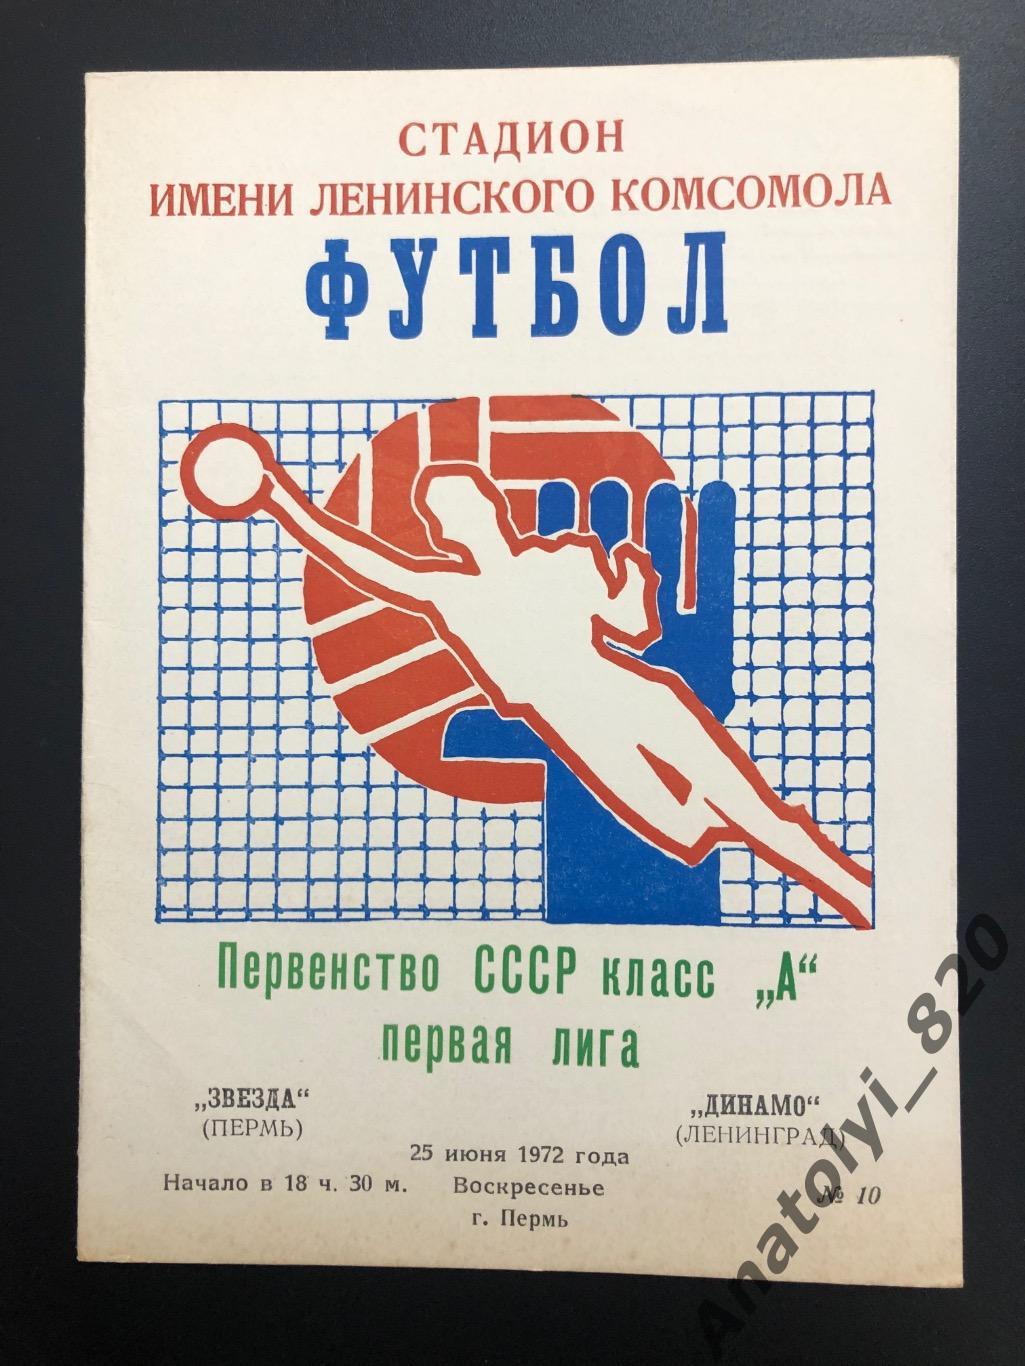 Звезда Пермь - Динамо Ленинград, 1972 год